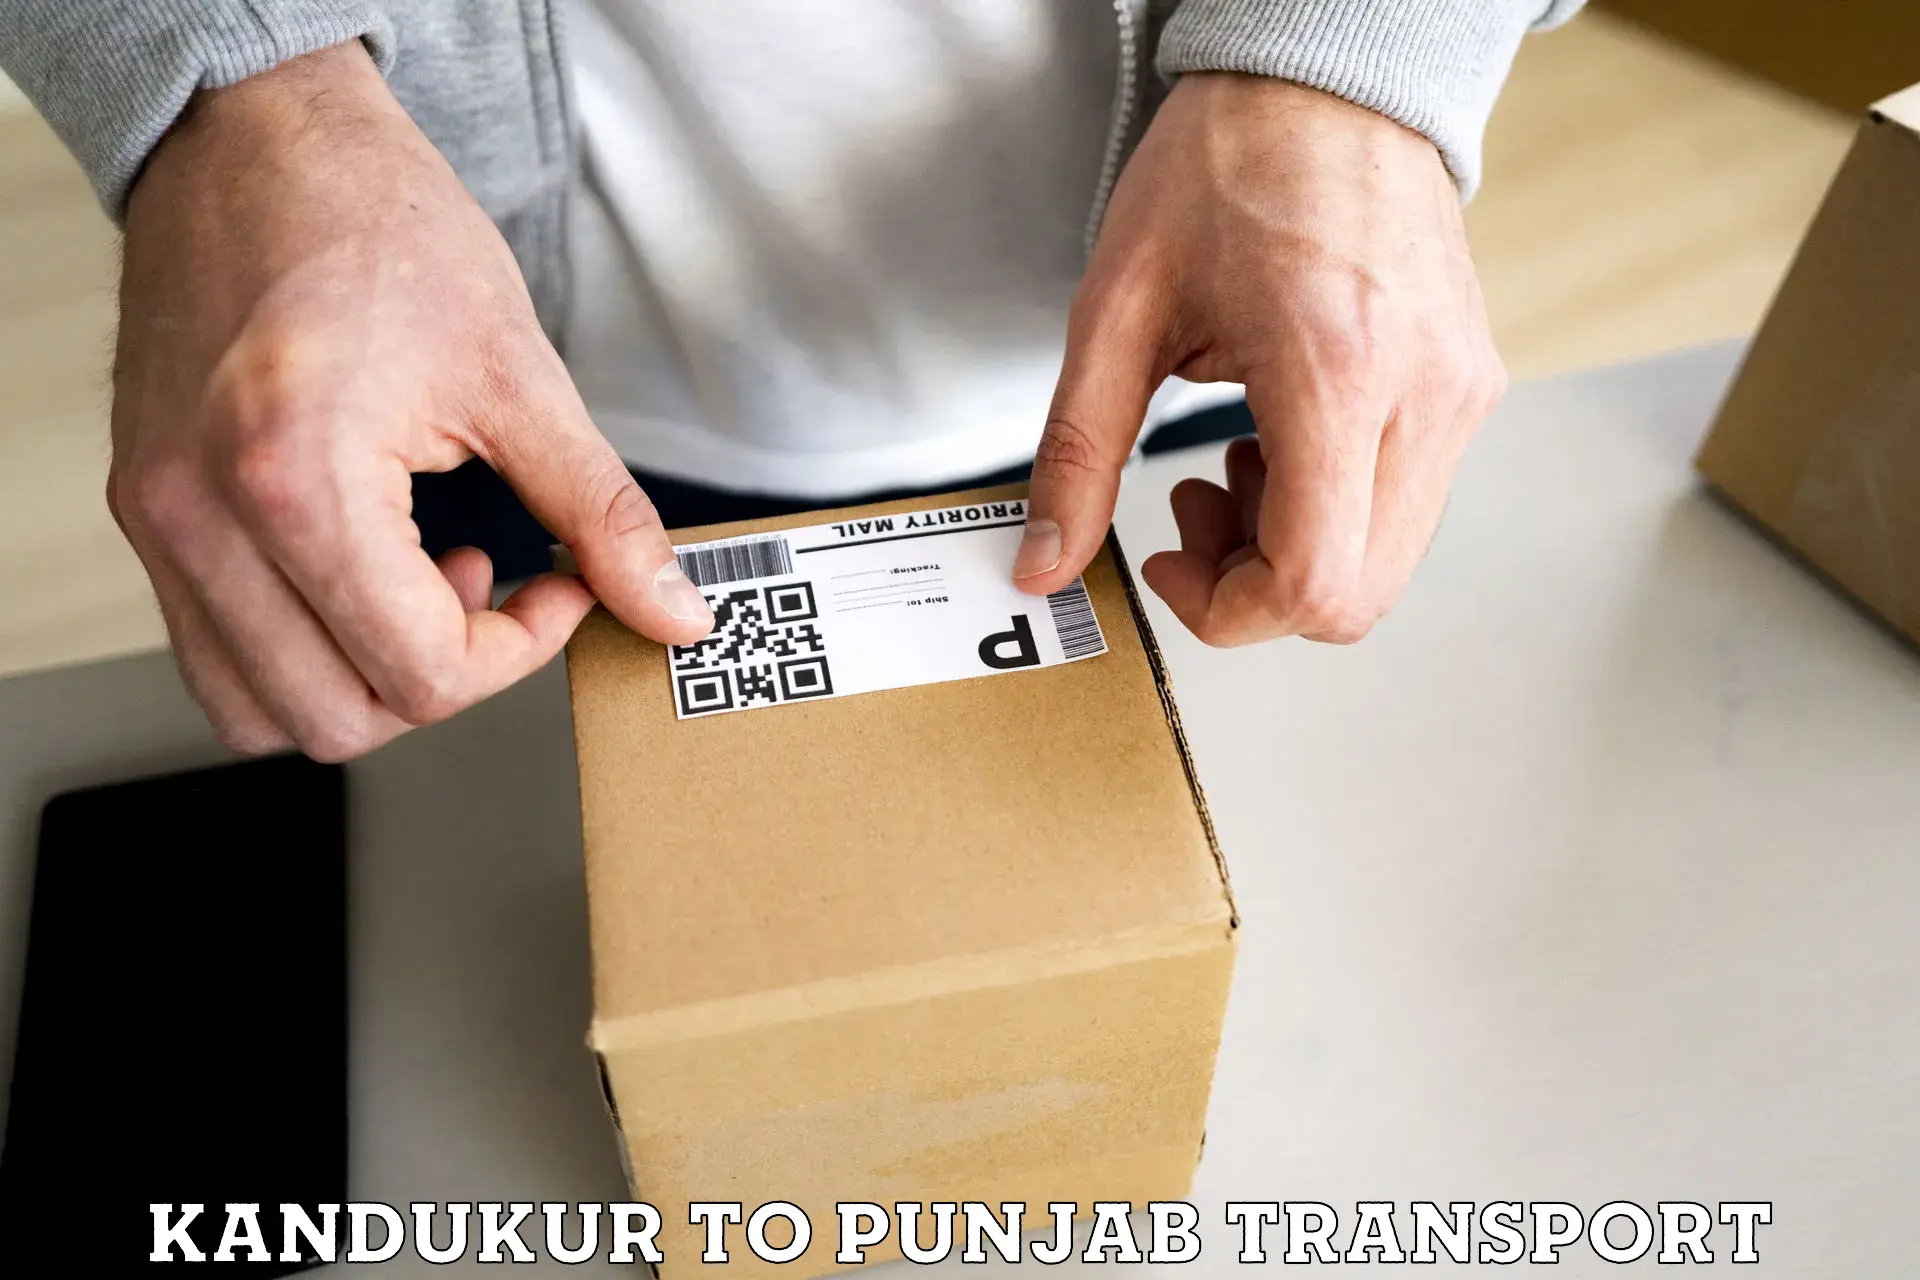 Container transport service Kandukur to Punjab